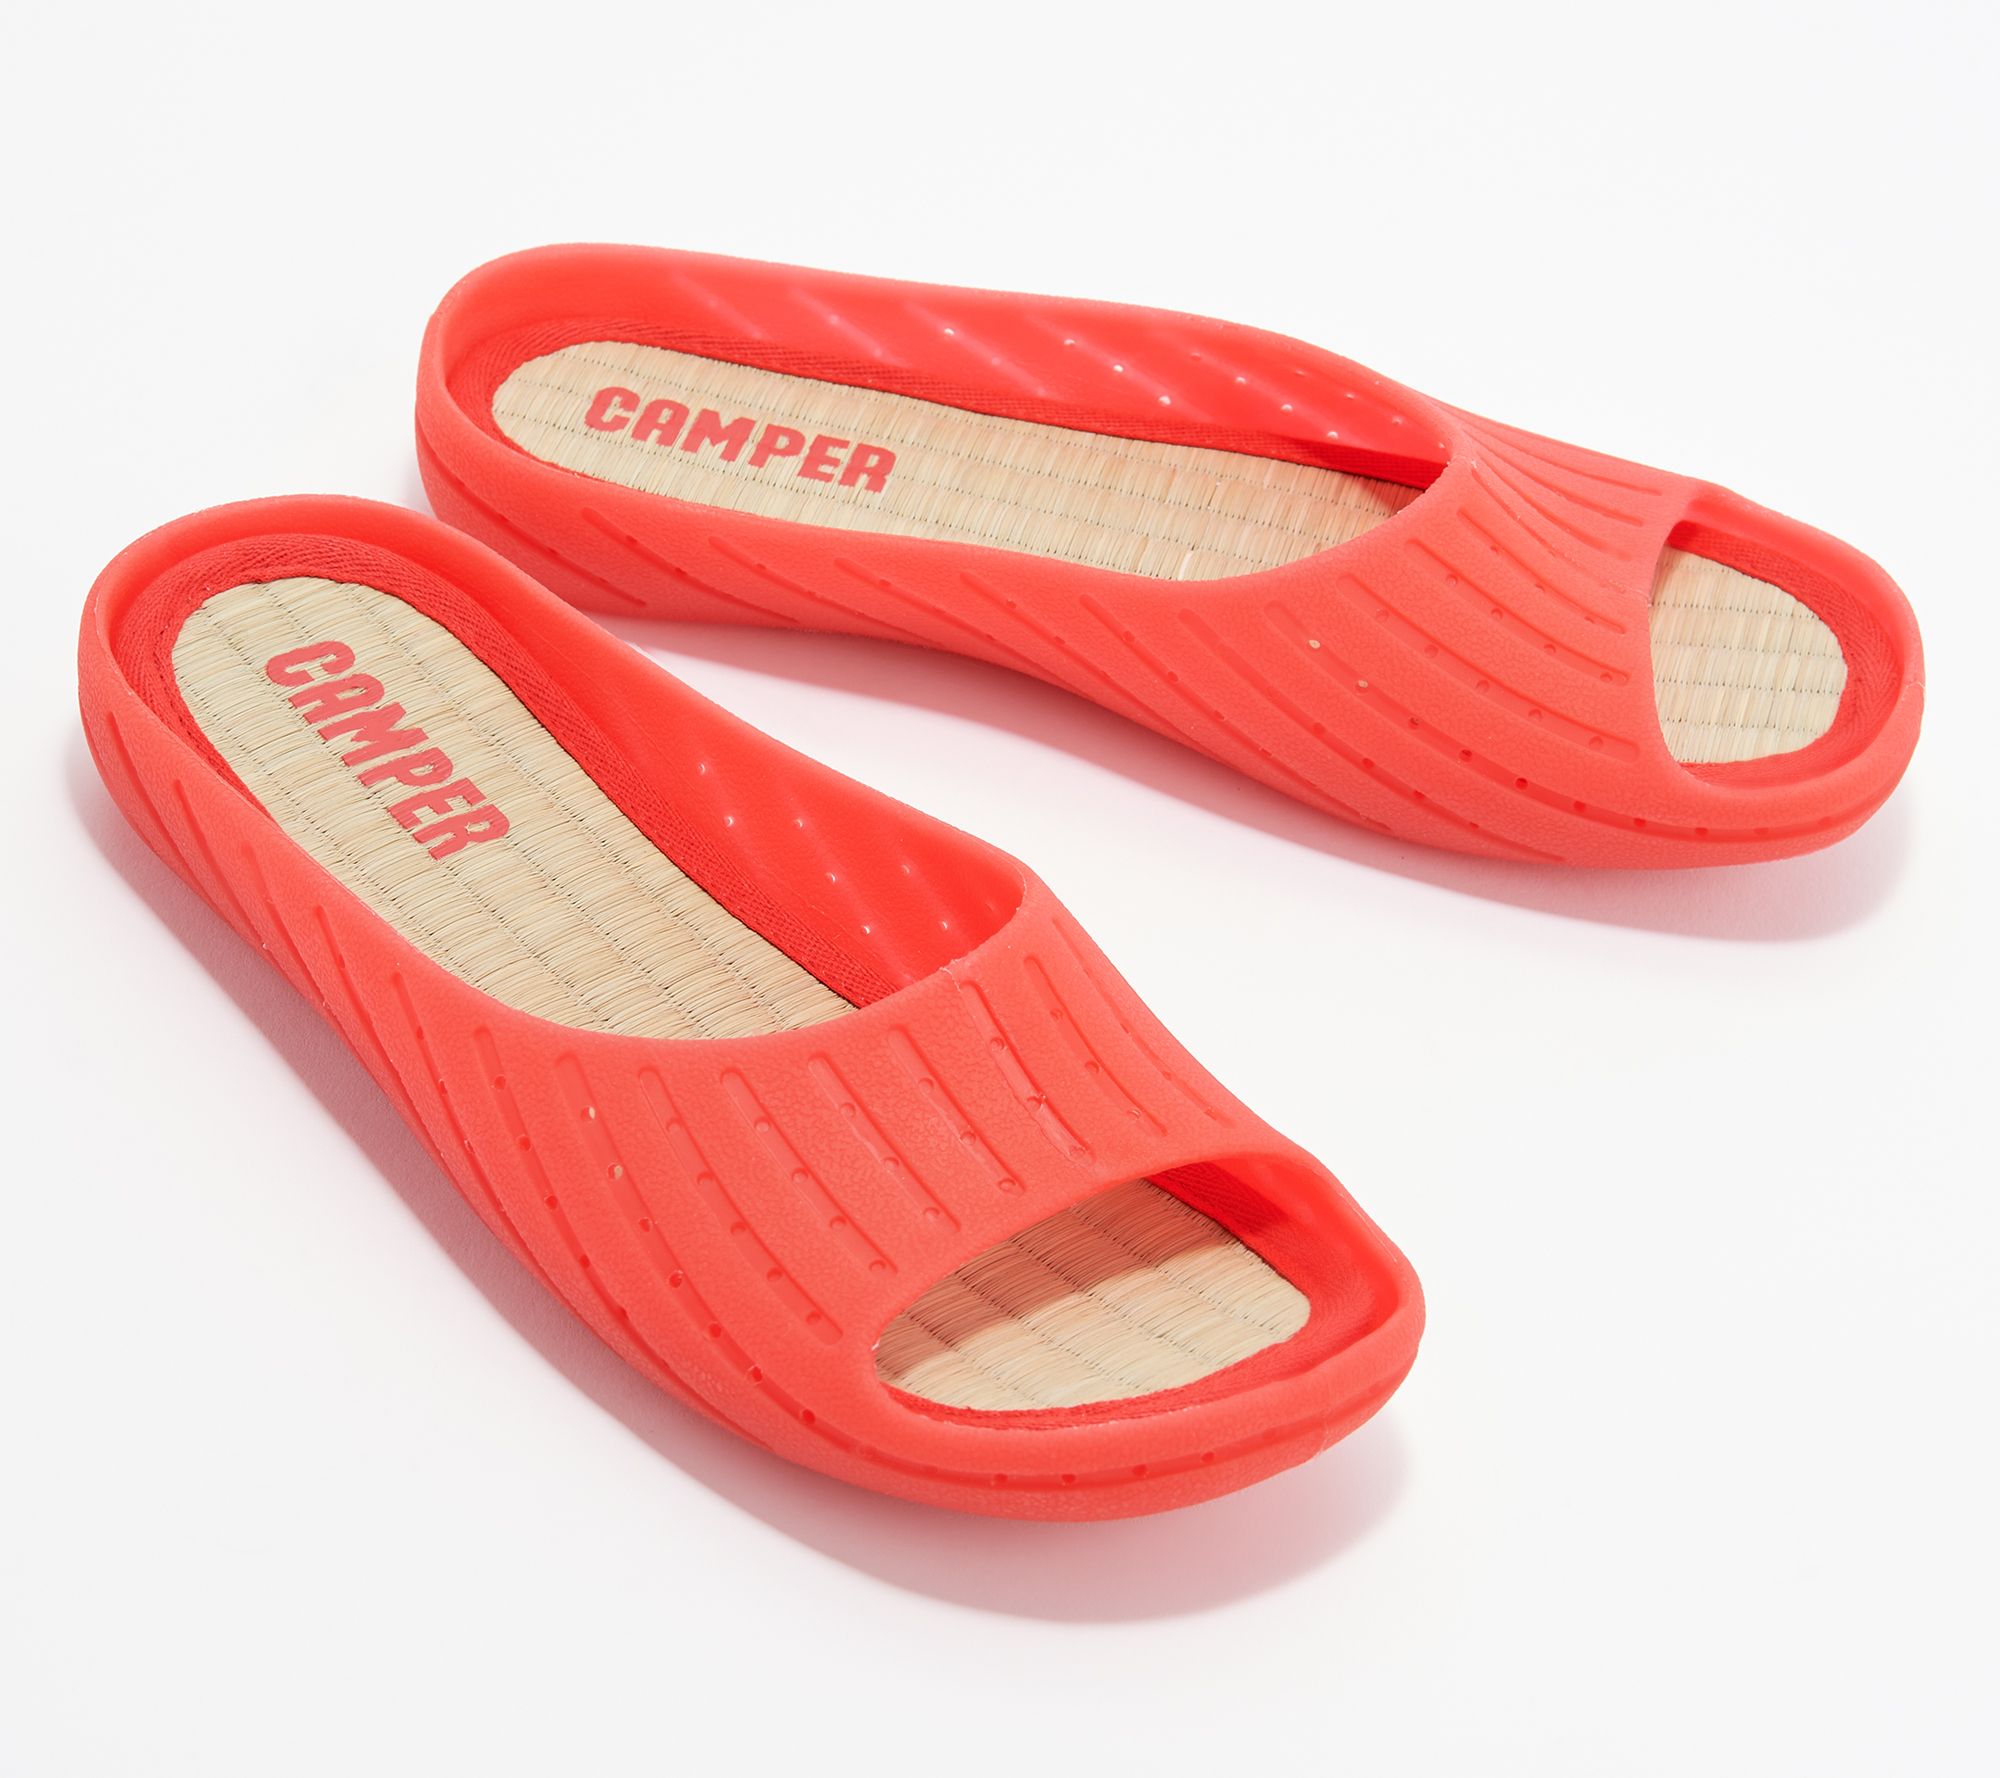 Camper Slide Sandals - Wabi Tatami - QVC.com